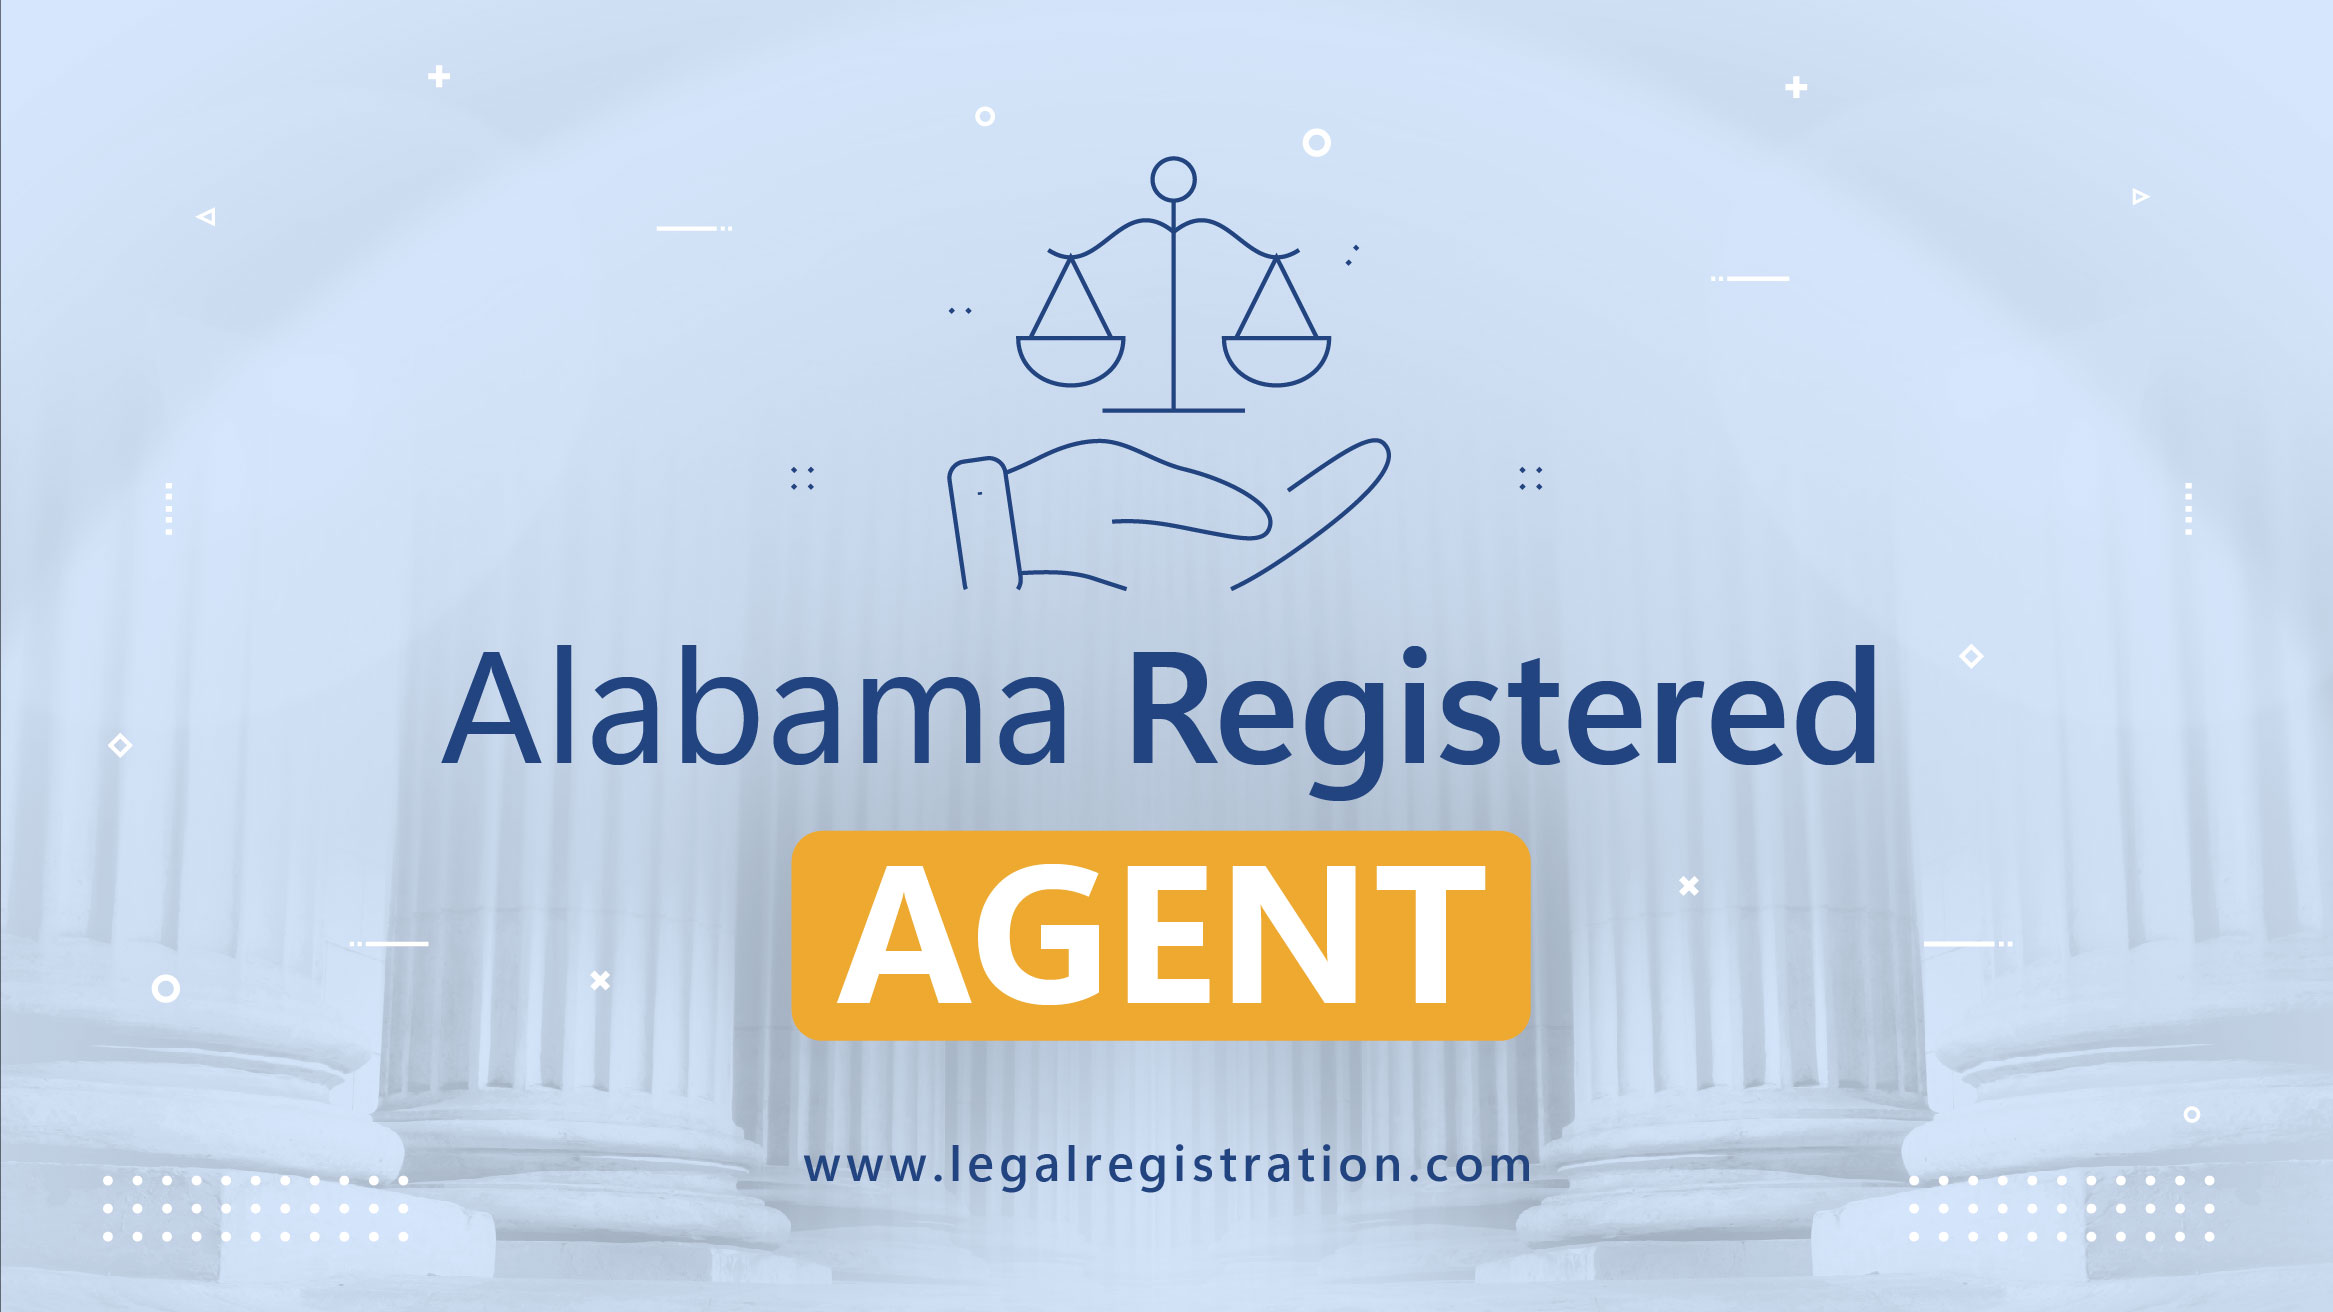 Alabama Registered Agent product image reference 1